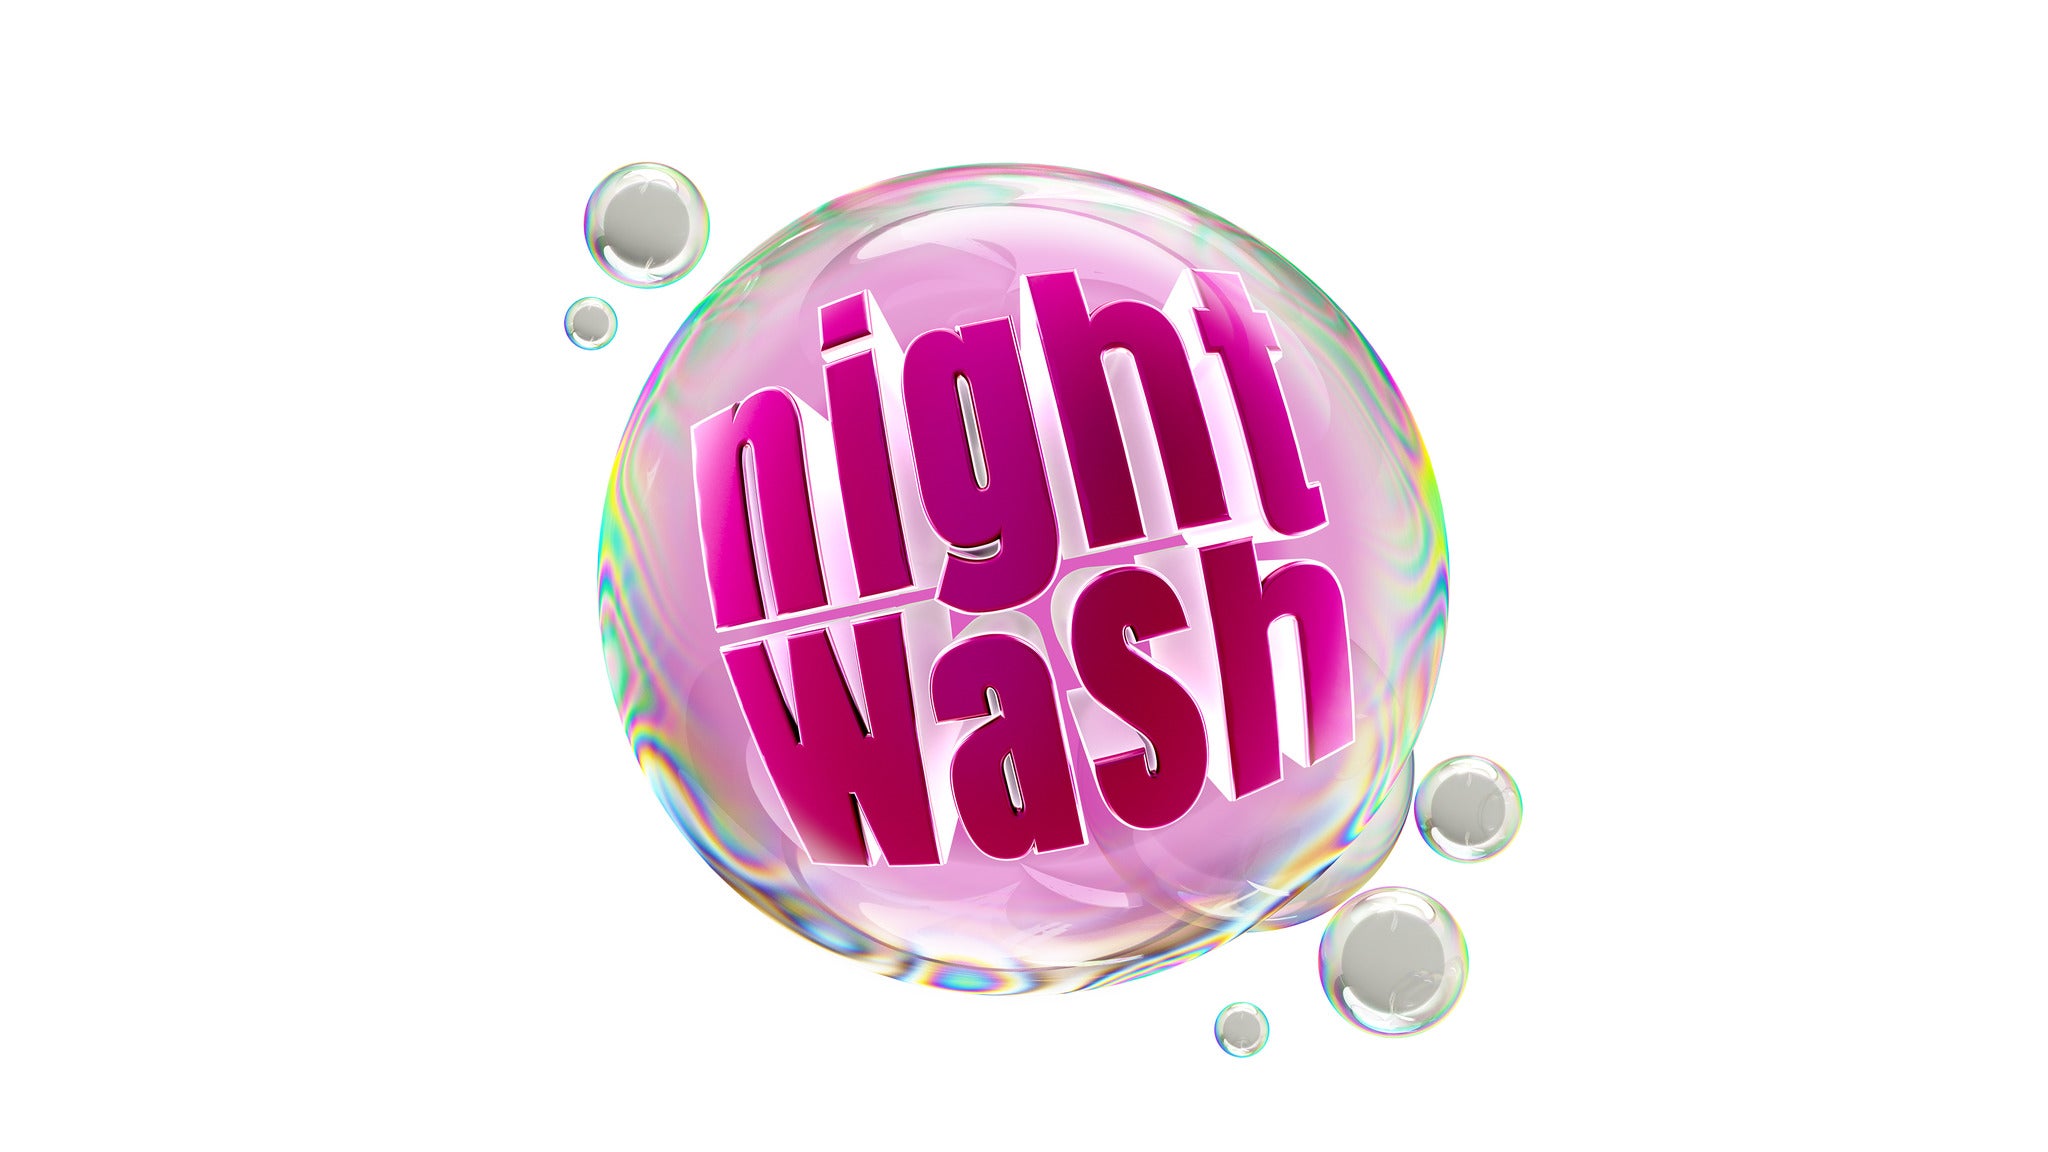 Nightwash presale information on freepresalepasswords.com